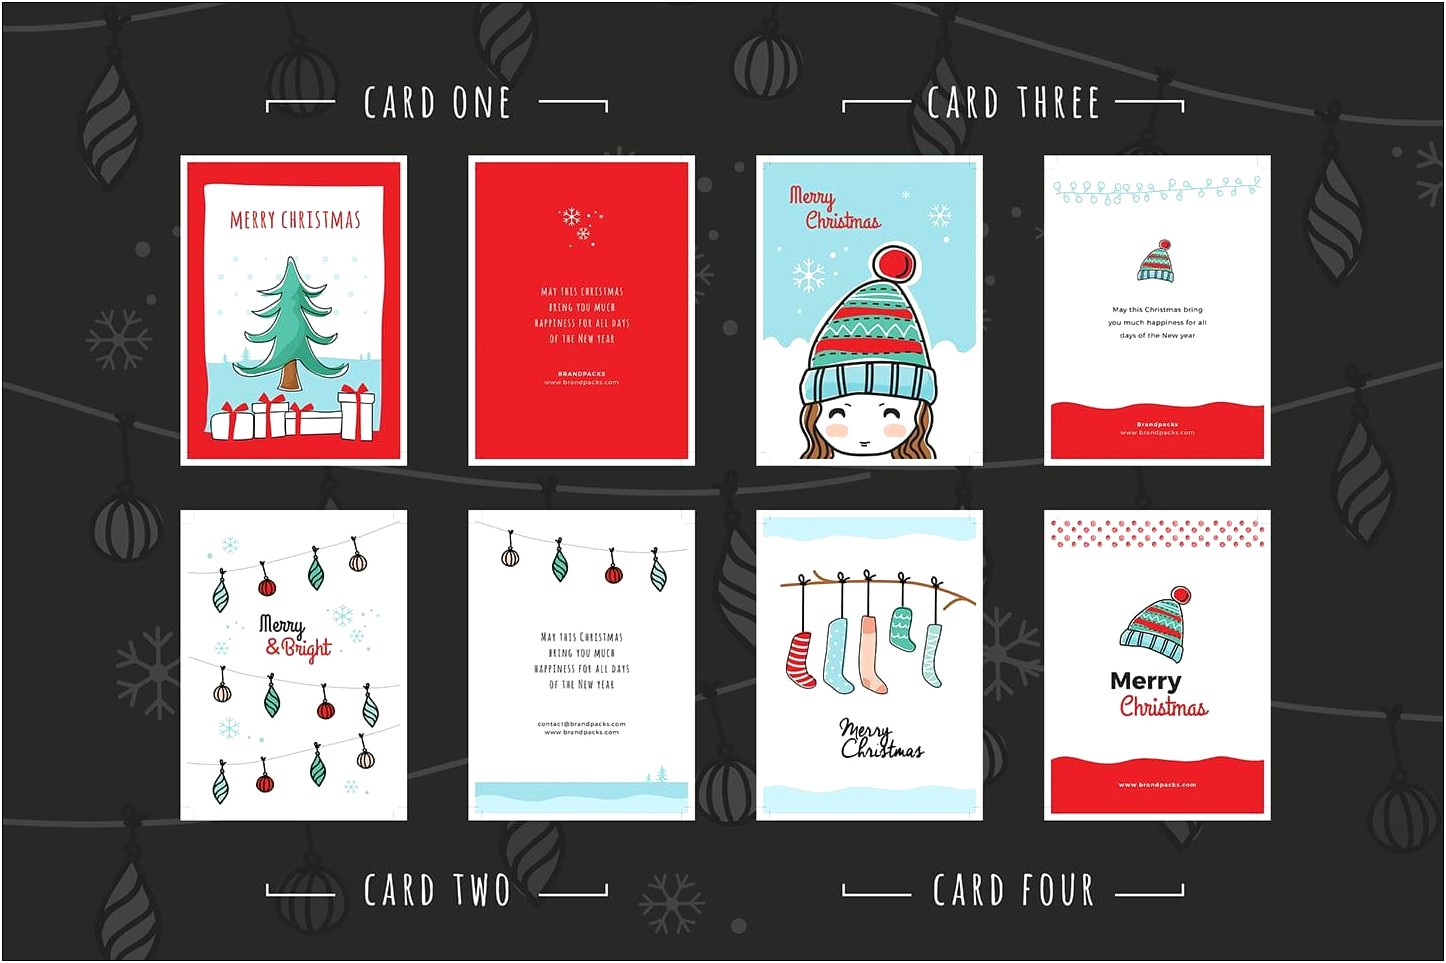 Adobe Illustrator Greeting Card Templates Free